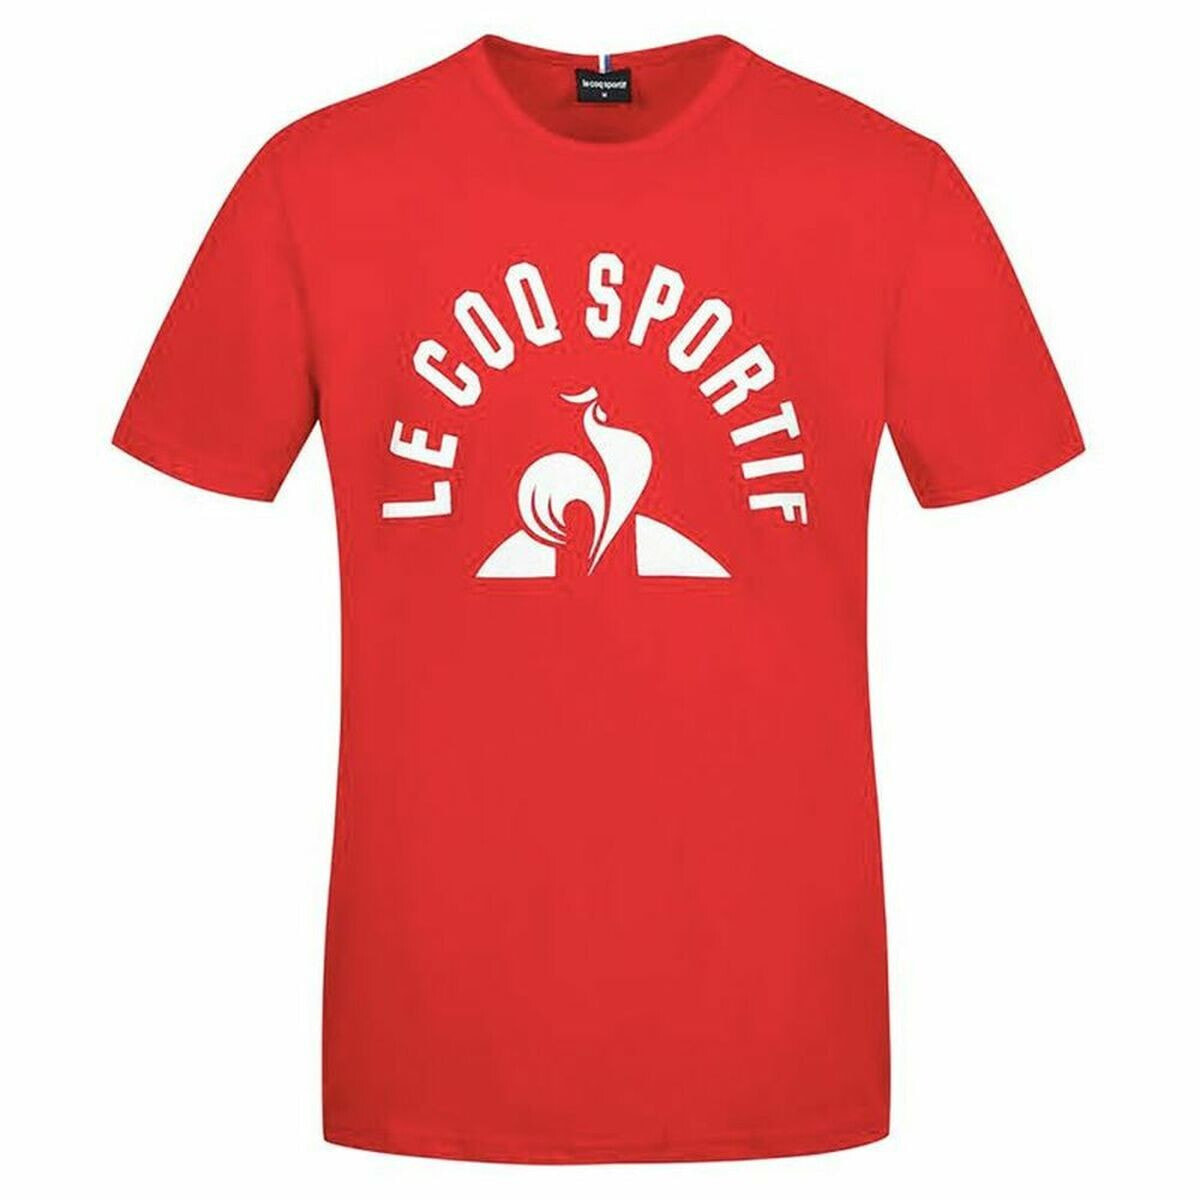 Men’s Short Sleeve T-Shirt Le coq sportif Bat Nº2 Red Men